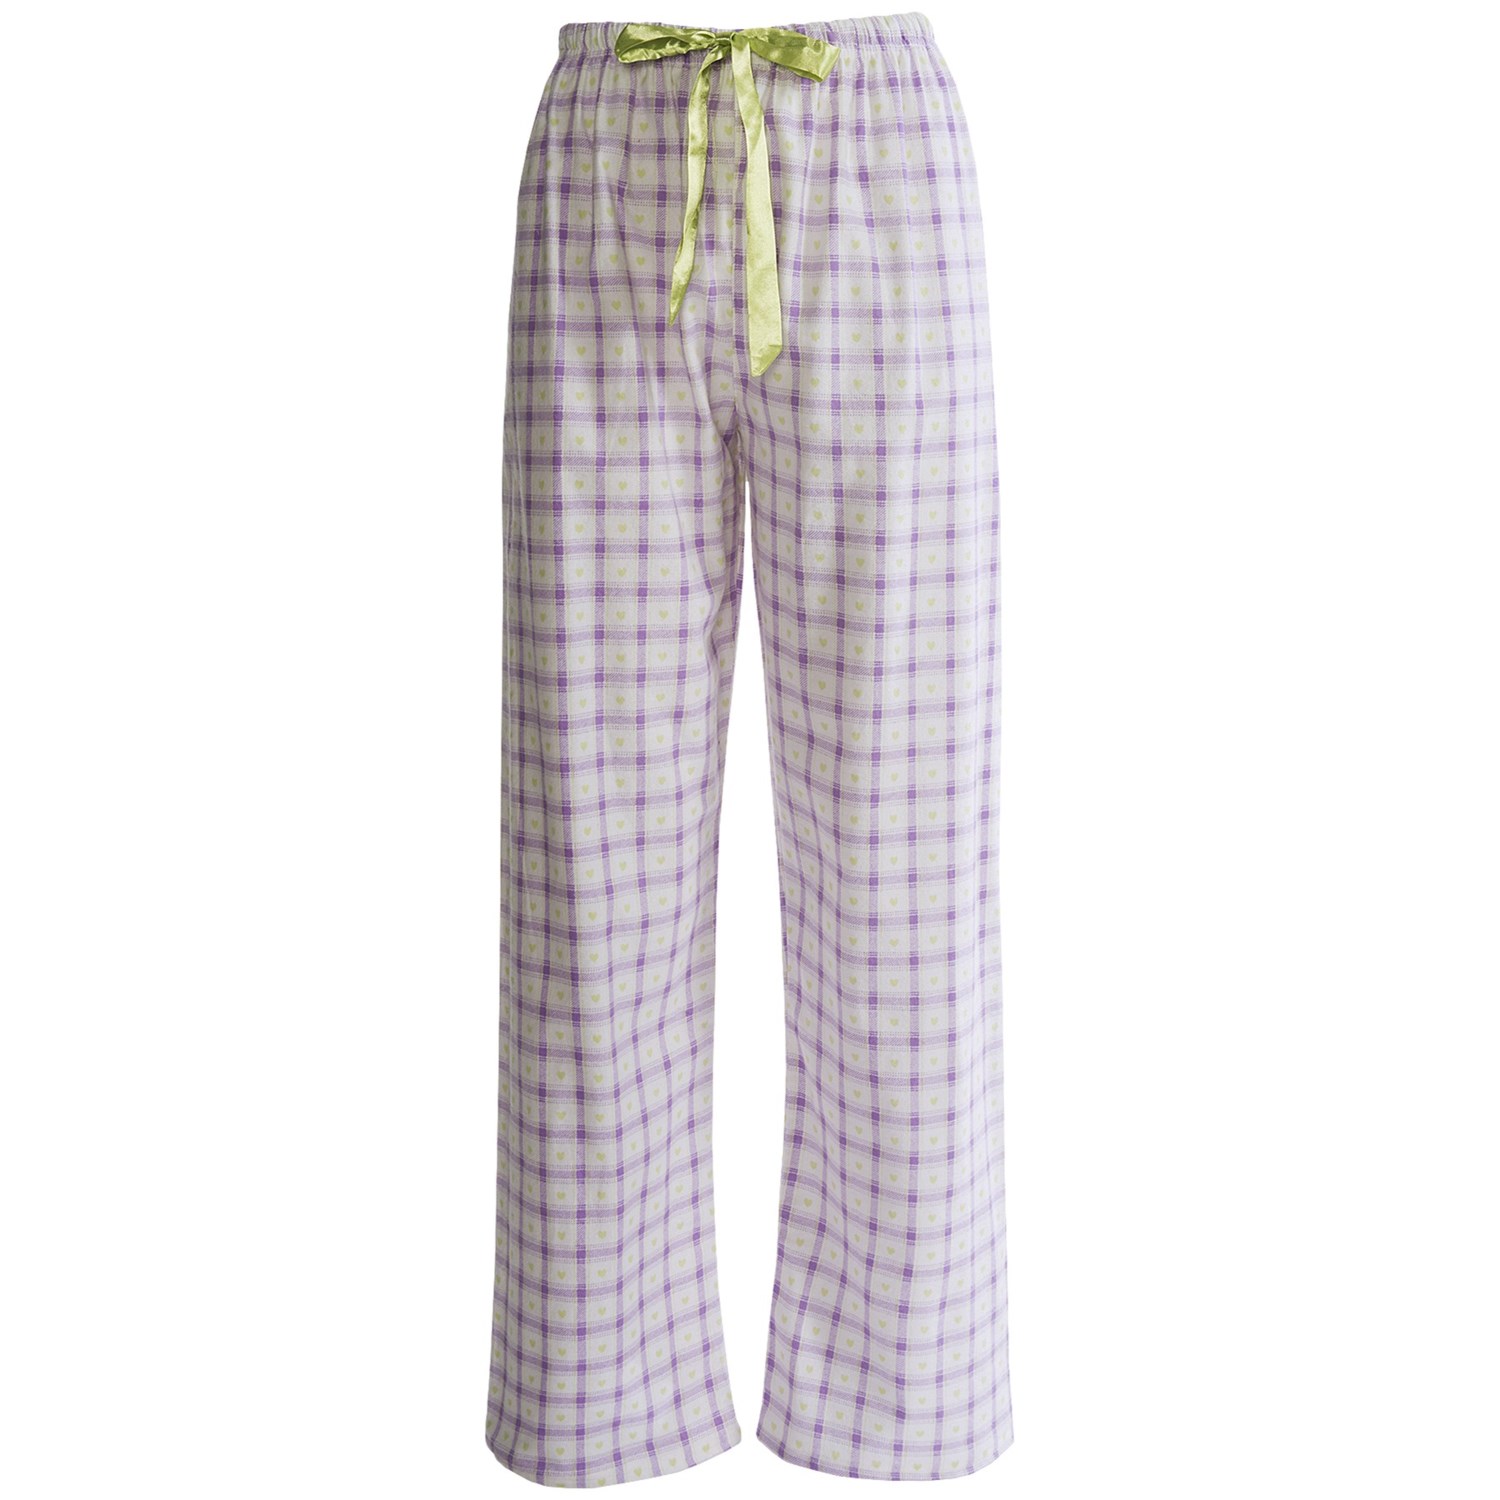 KayAnna Printed Flannel Pajama Bottoms - Cotton (For Women) - Save 40%